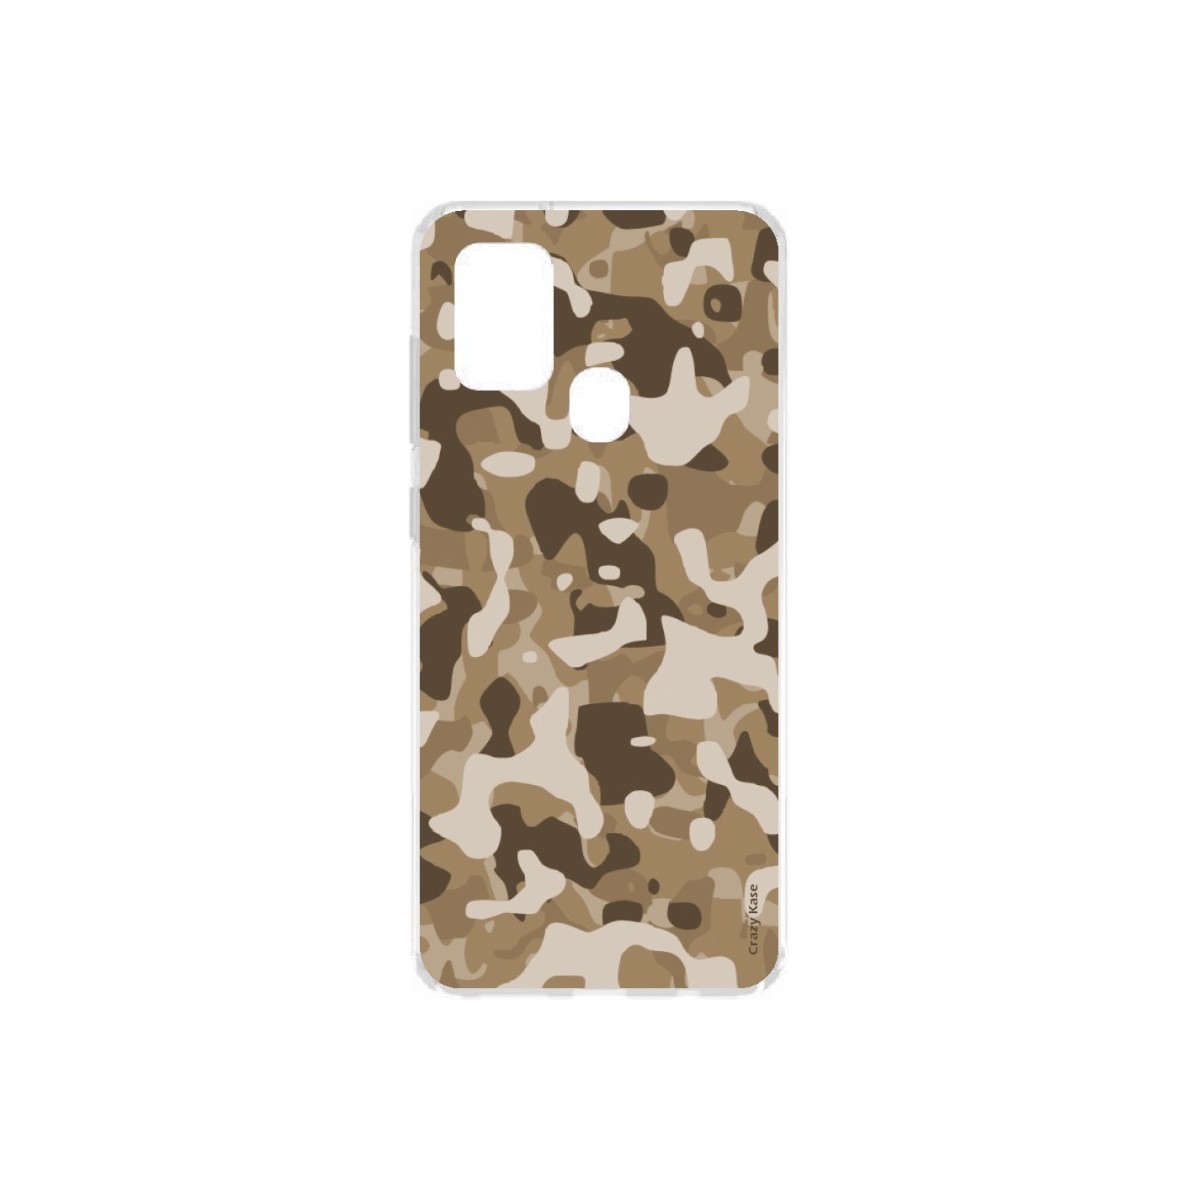 Coque Samsung Galaxy A21s souple Camouflage militaire désert Crazy Kase